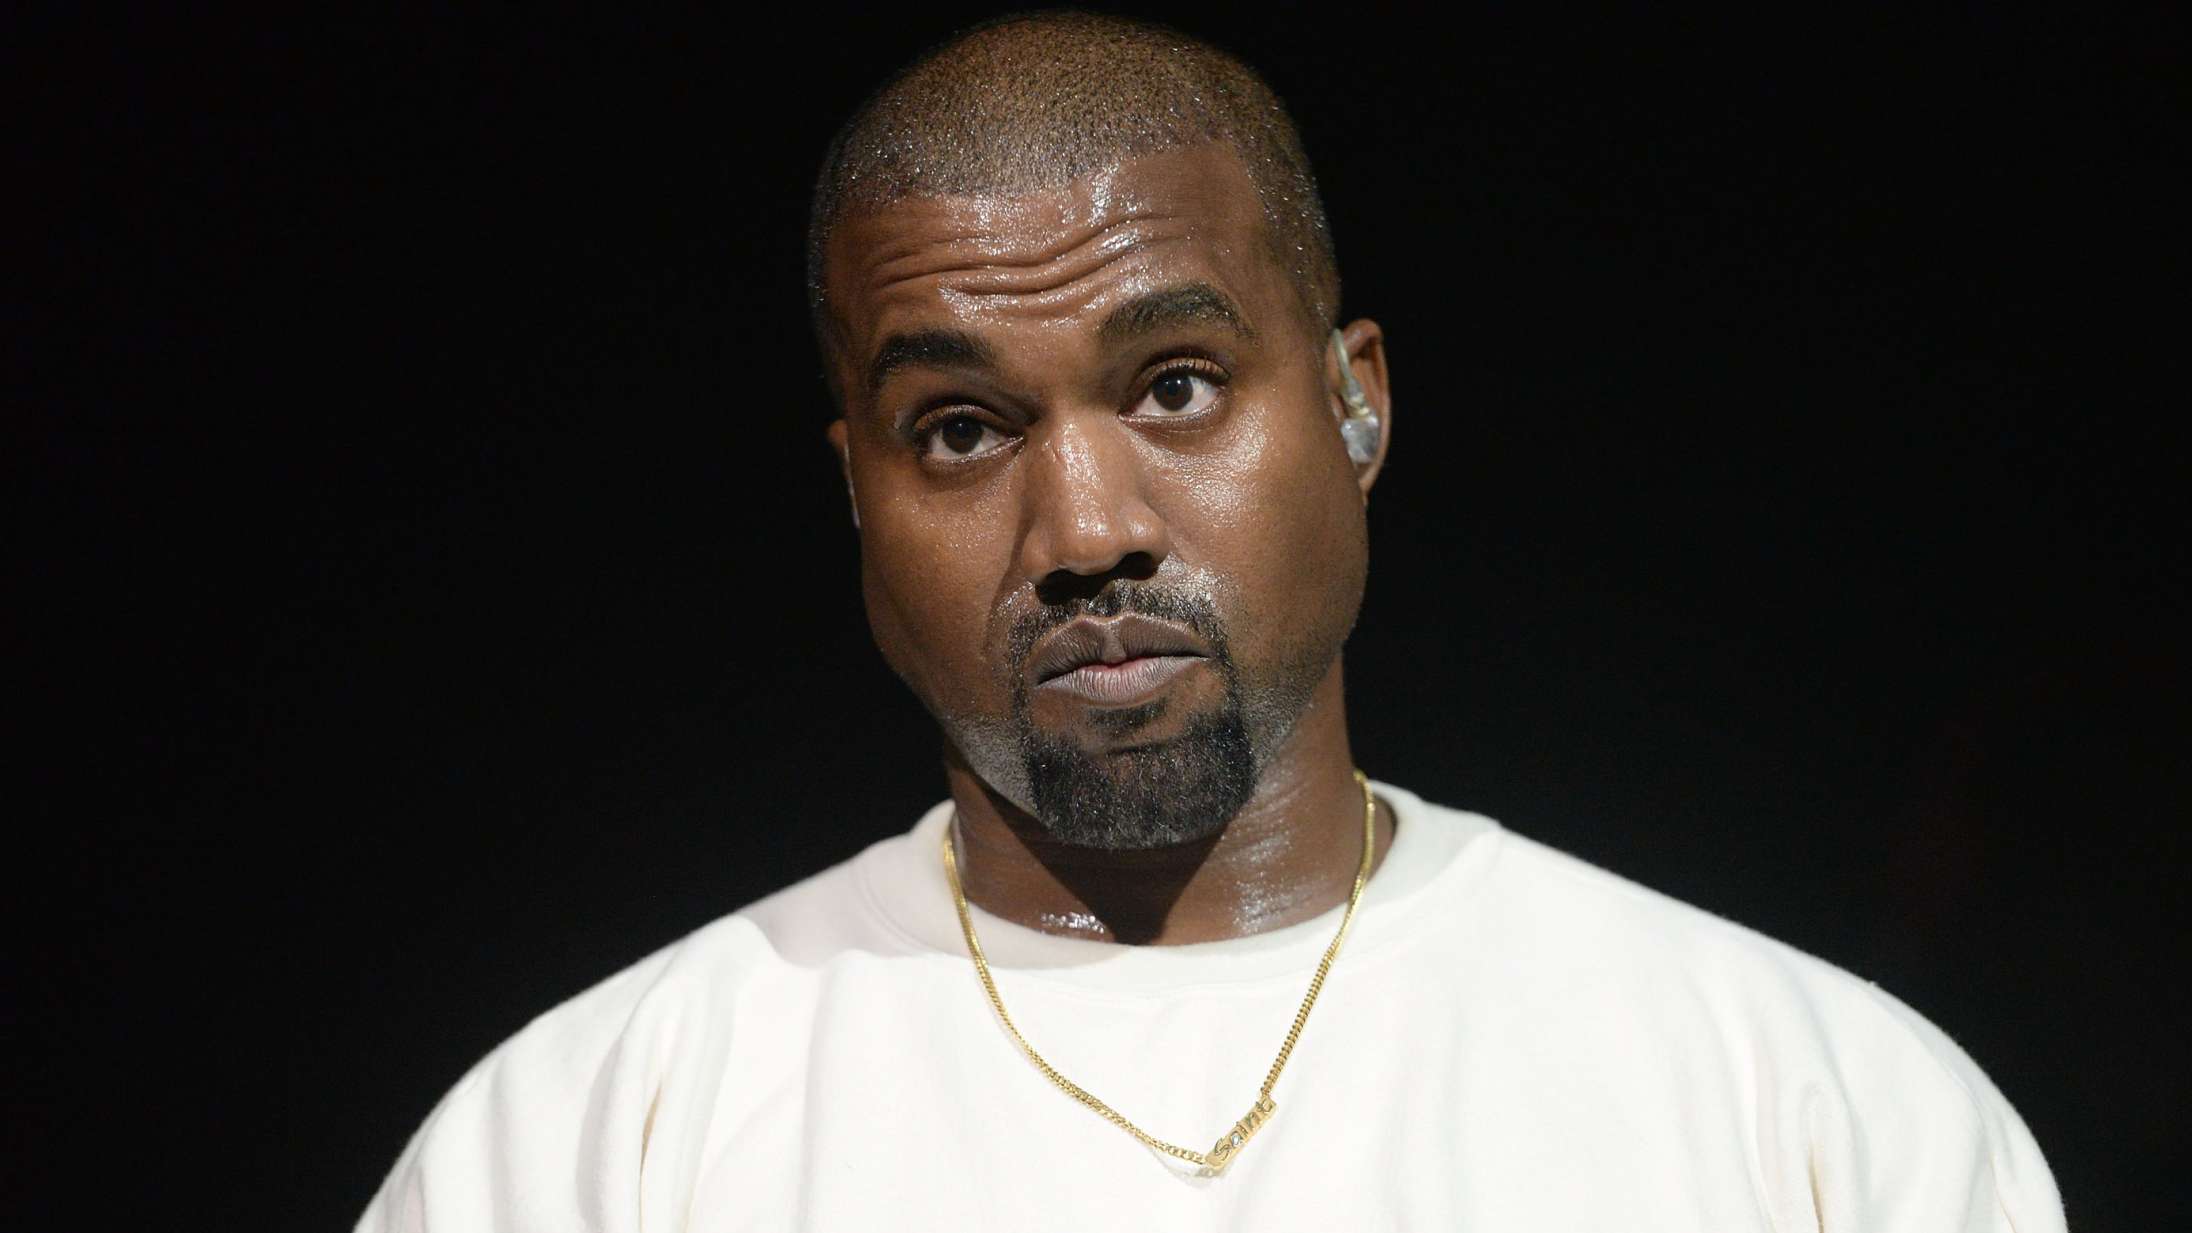 Kanye West og Futures nye alliance ligner en krigserklæring mod Kim Kardashian